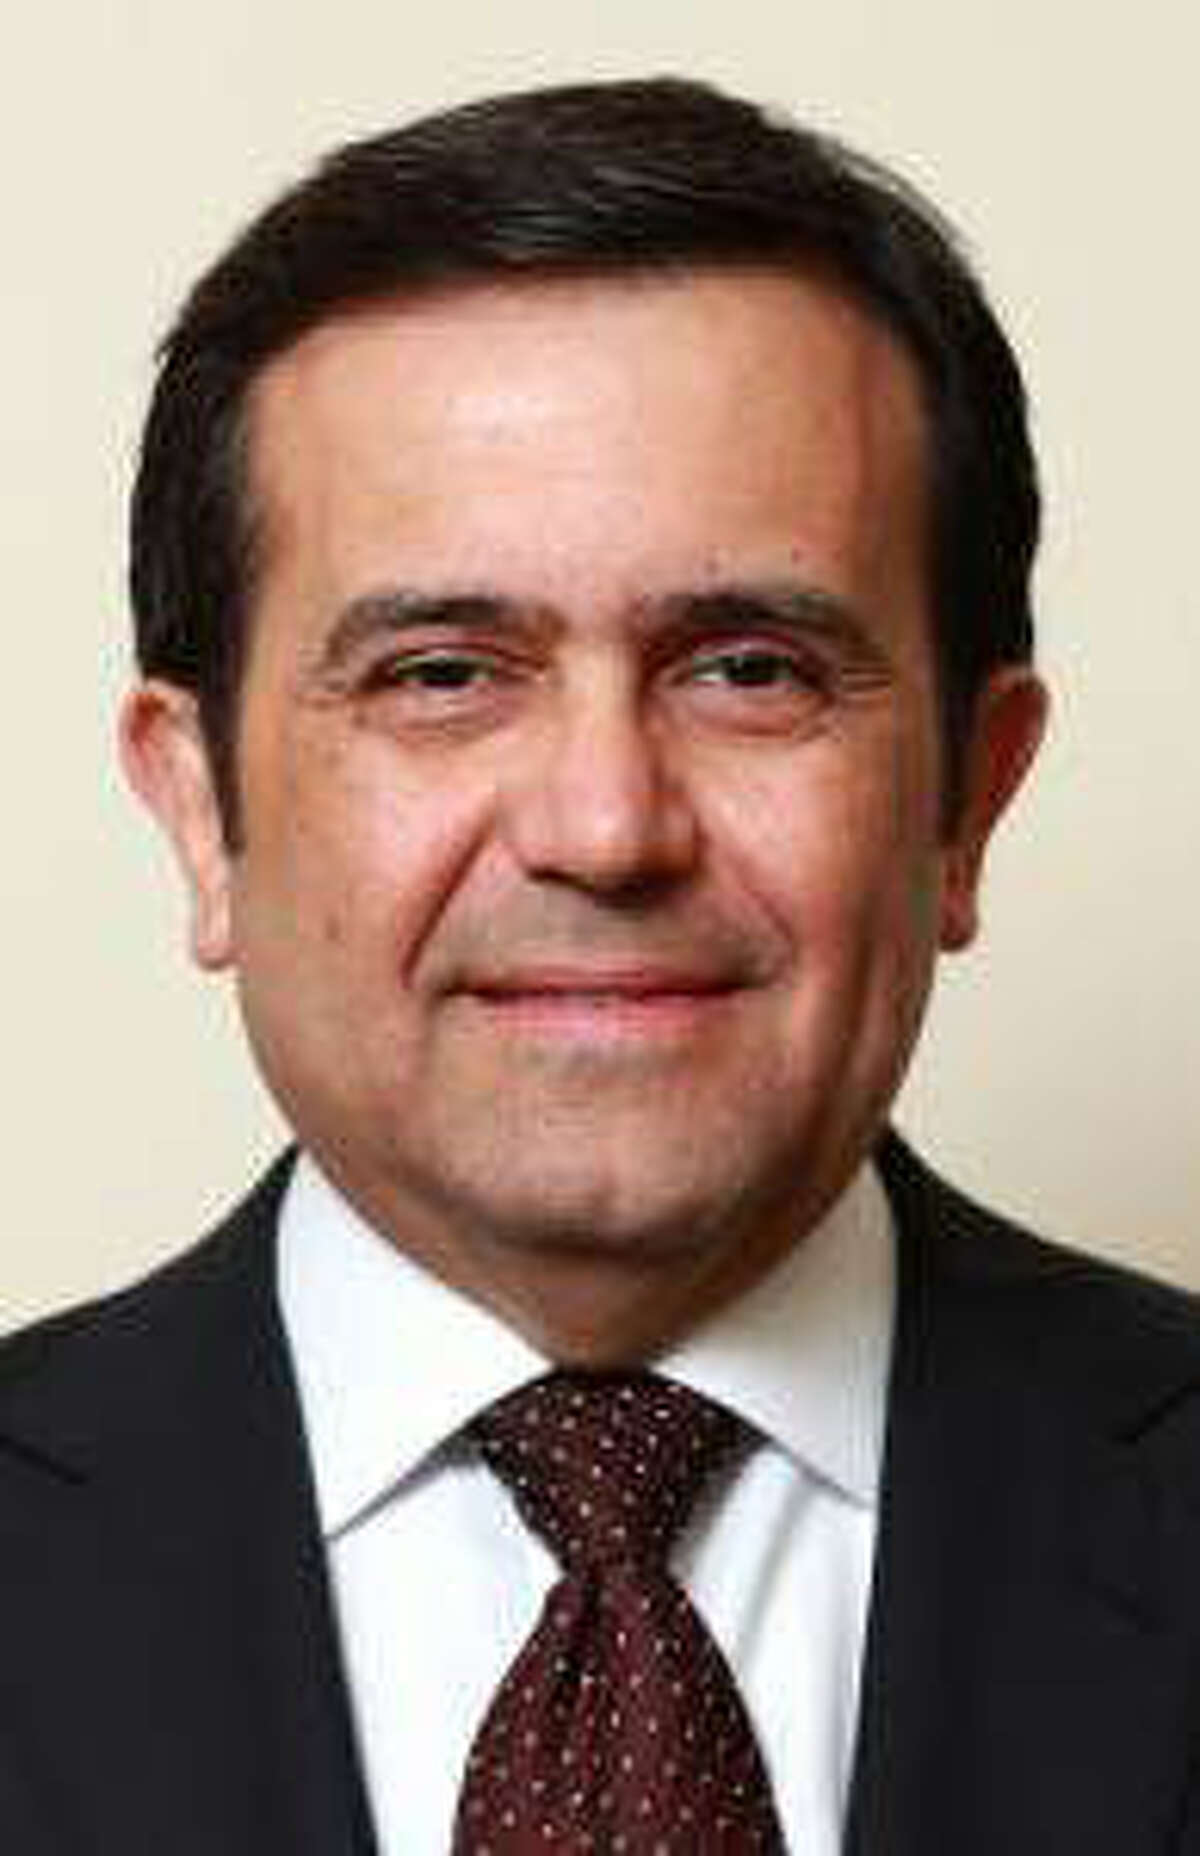 Ildefonso Guajardo is secretary of economy of Mexico.